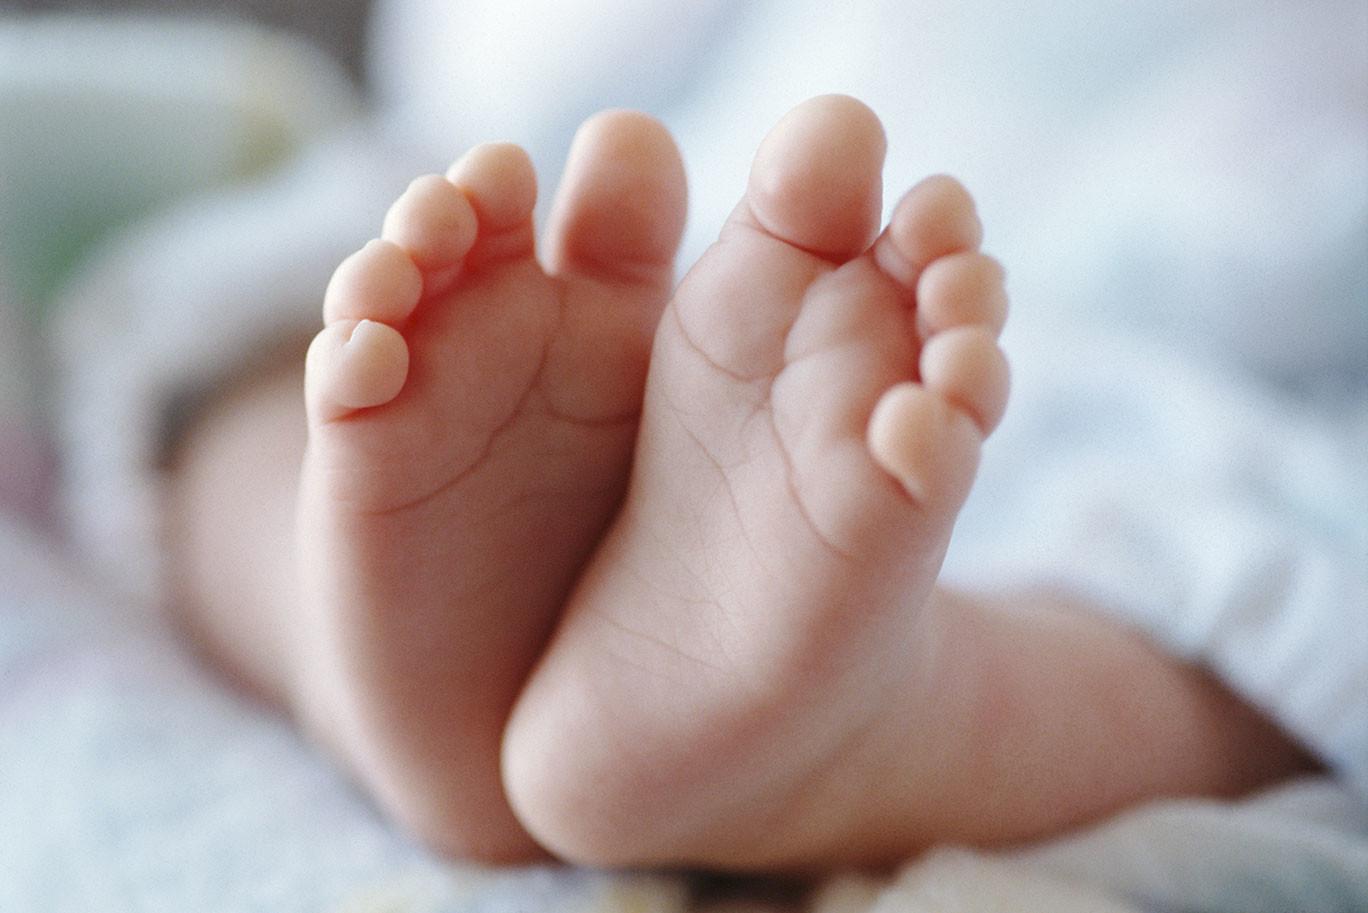 Roditelj treba biti oprezan pri pokrivanju bebinih nogu - Avaz